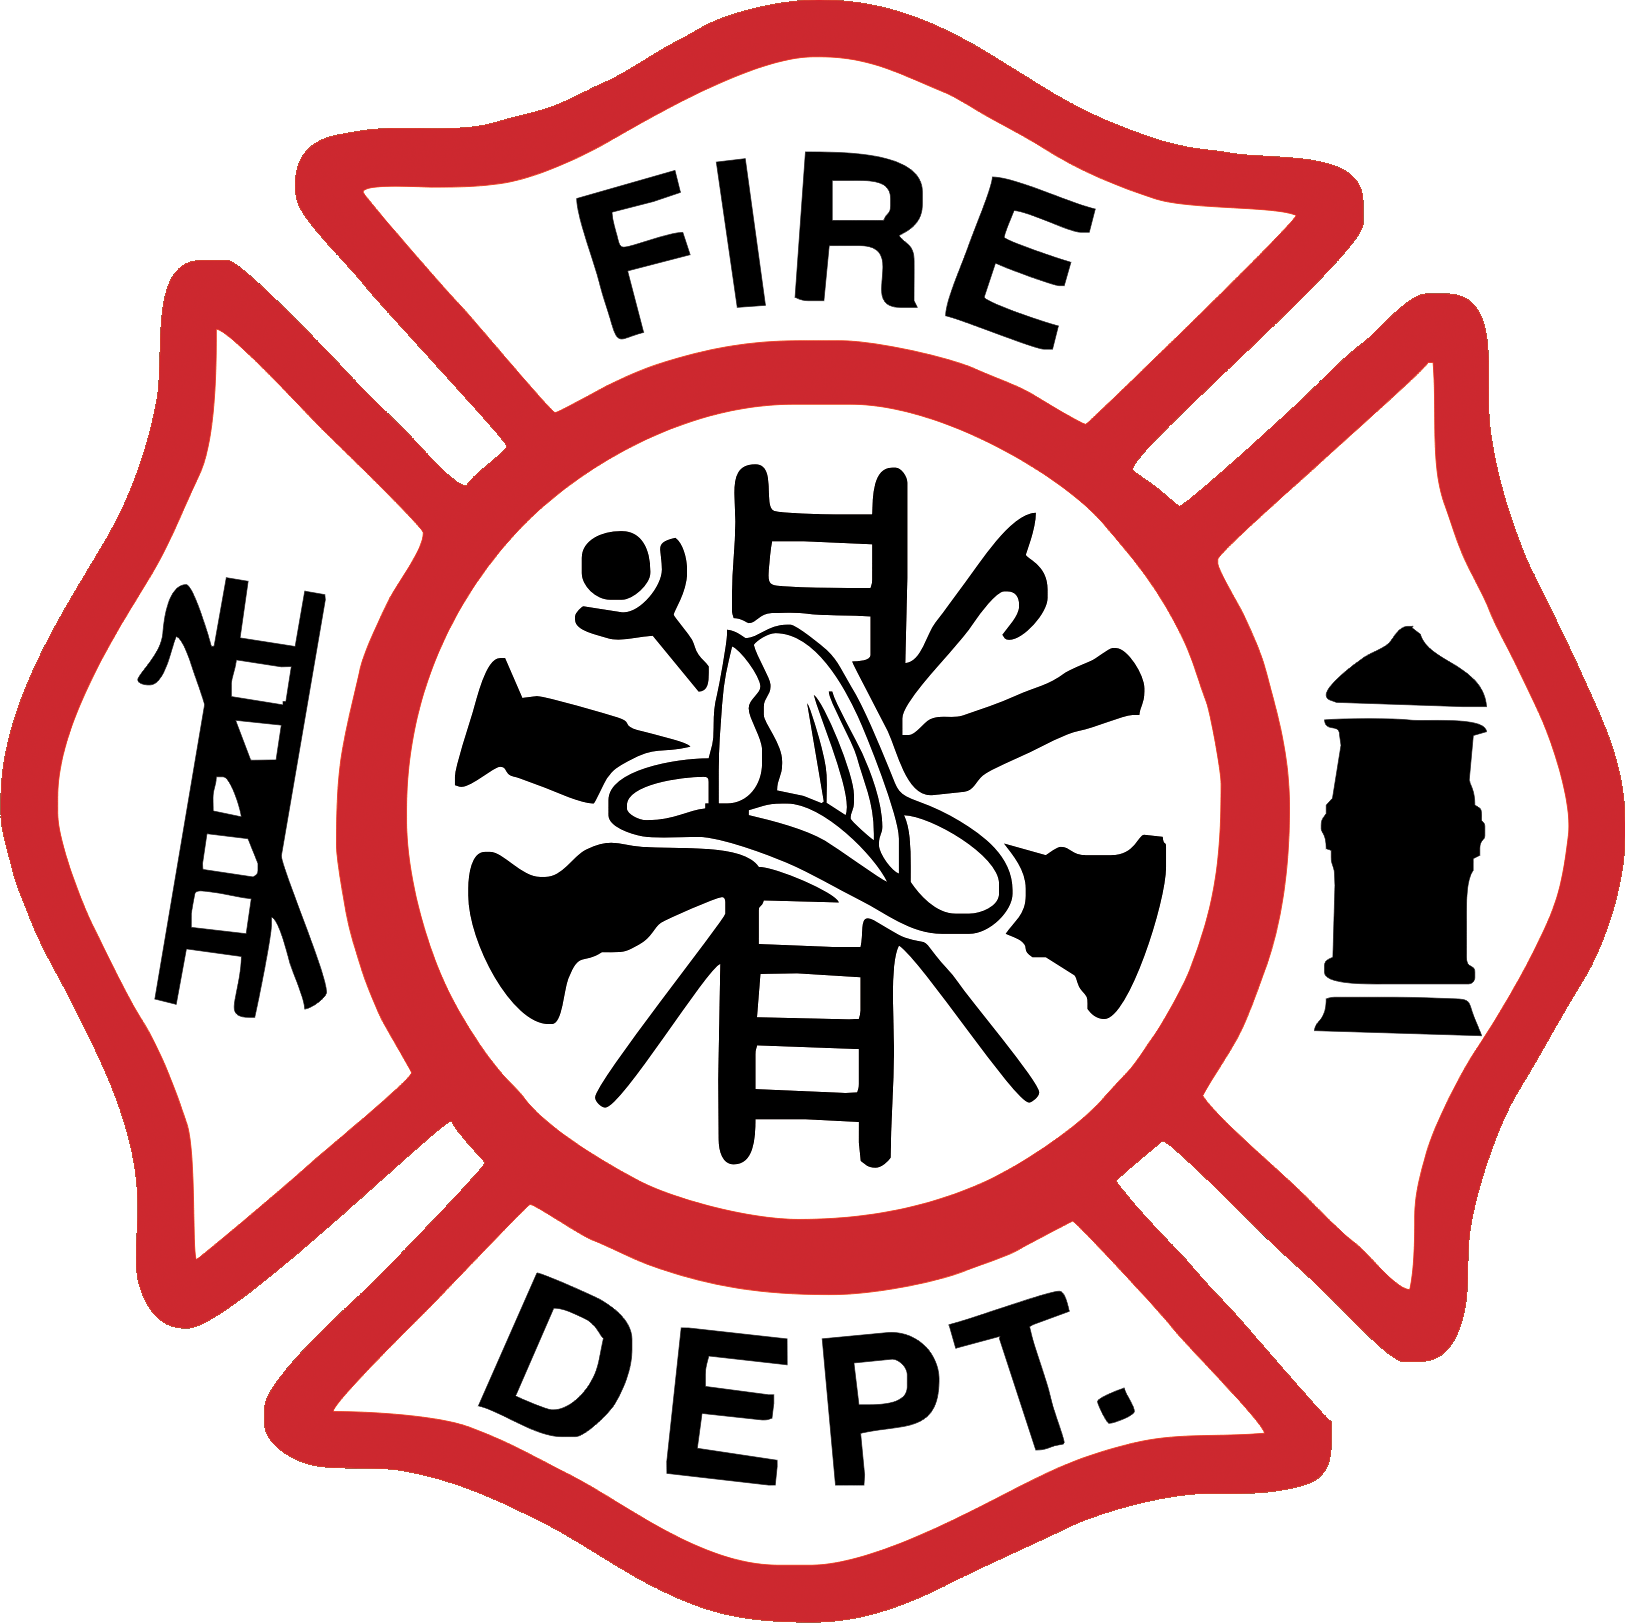 fire-dept-logo-vector-at-getdrawings-free-download